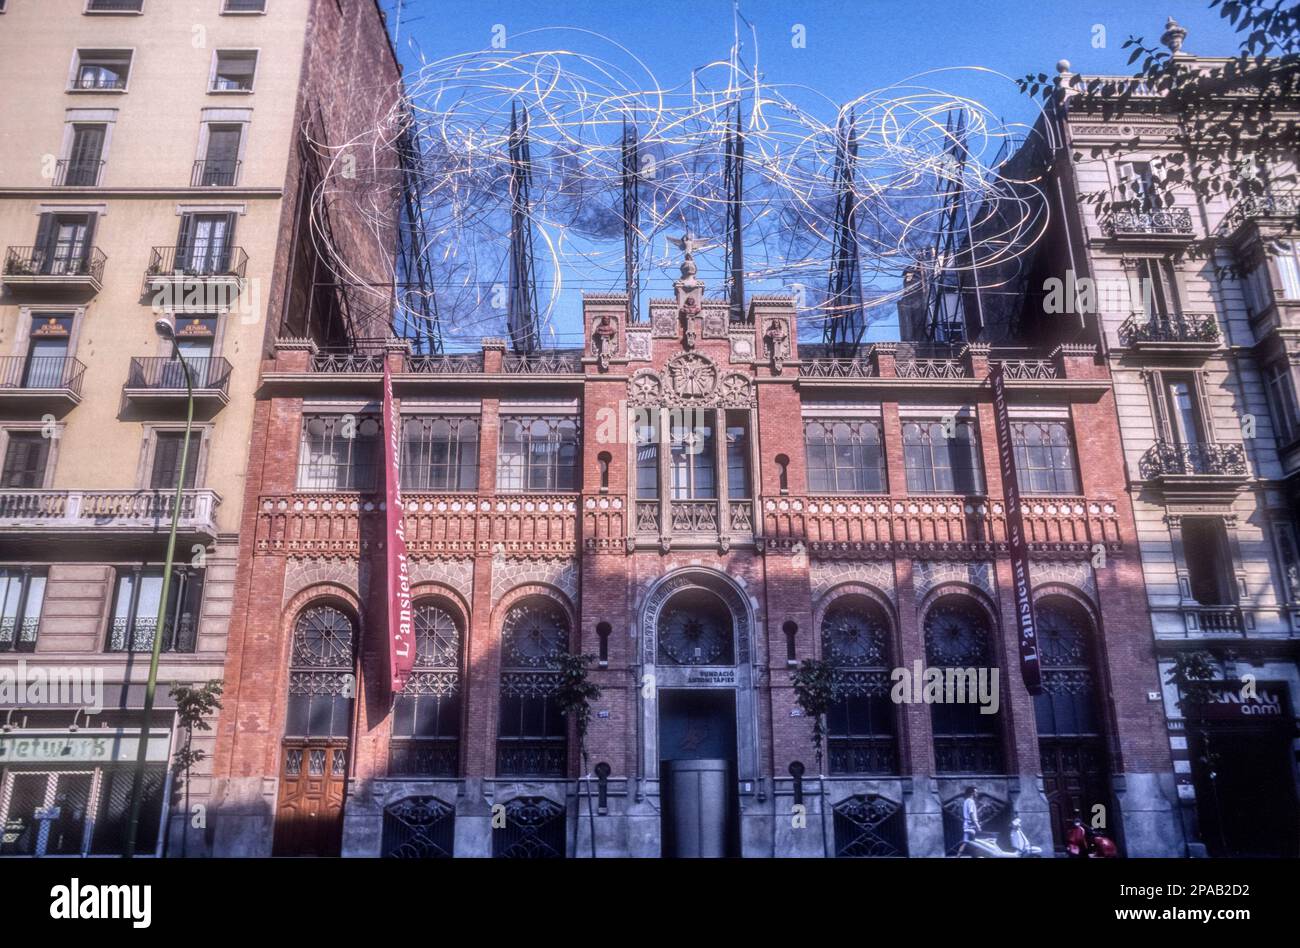 Il Fundació Antoni Tàpies di Carrer d'Aragó, Barcellona, si trova nell'ex Casa Montaner i Simon progettata da Lluís Domènech i Montaner. La scultura sul tetto del 1990 è Núvol i cadira o Cloud and Chair, di Tàpies. Foto Stock